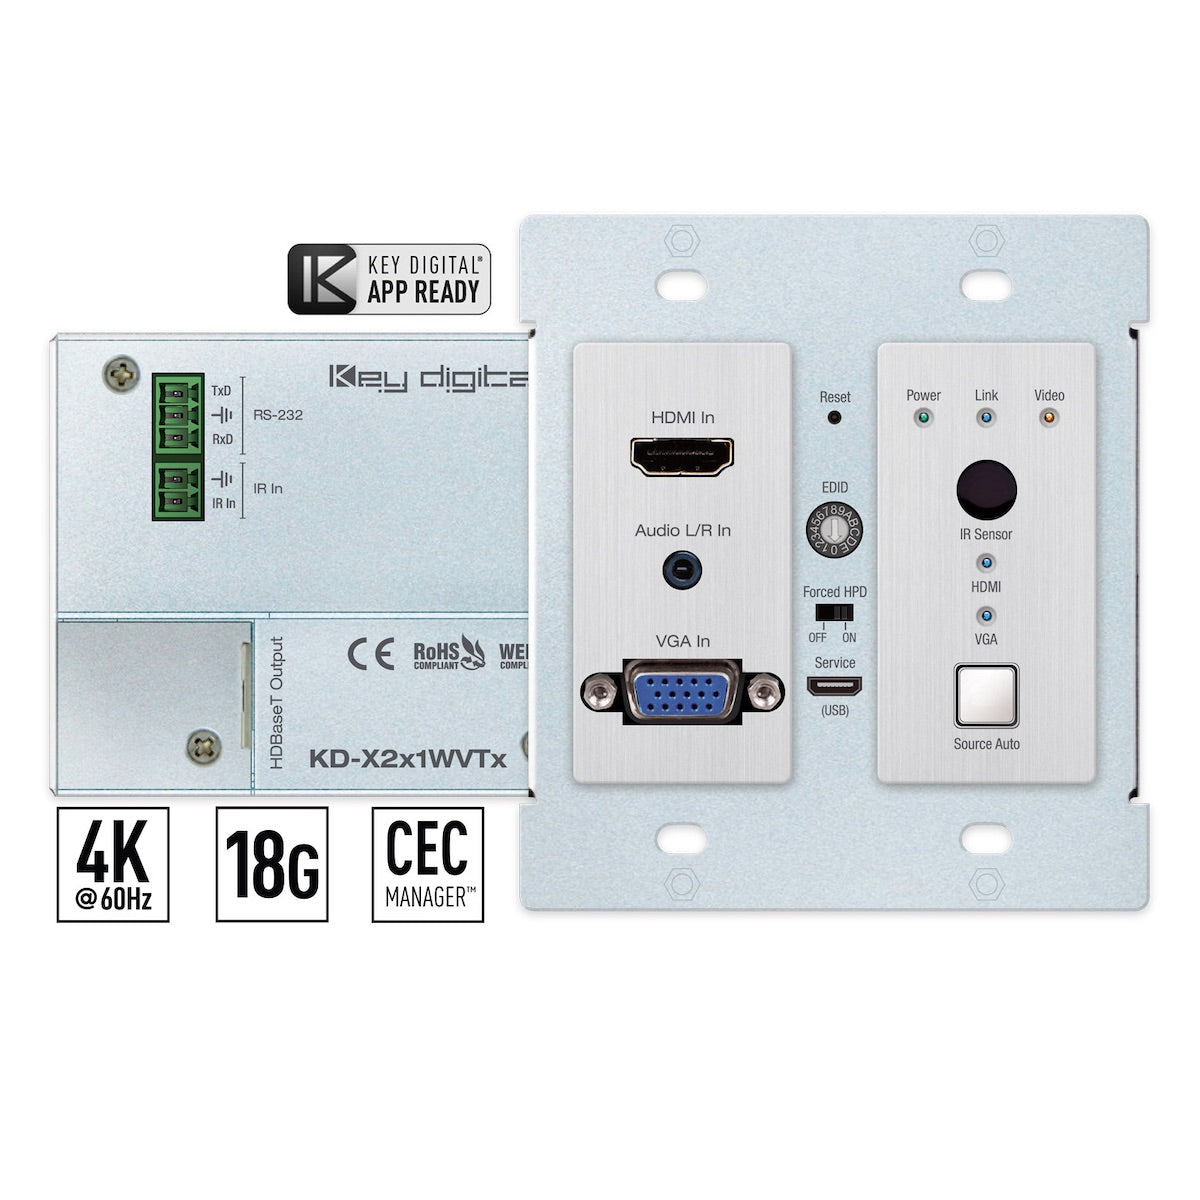 Key Digital KD-X2x1WVTx - 4K/18G HDBaseT Wall Plate Switcher, HDMI & VGA, front and rear views